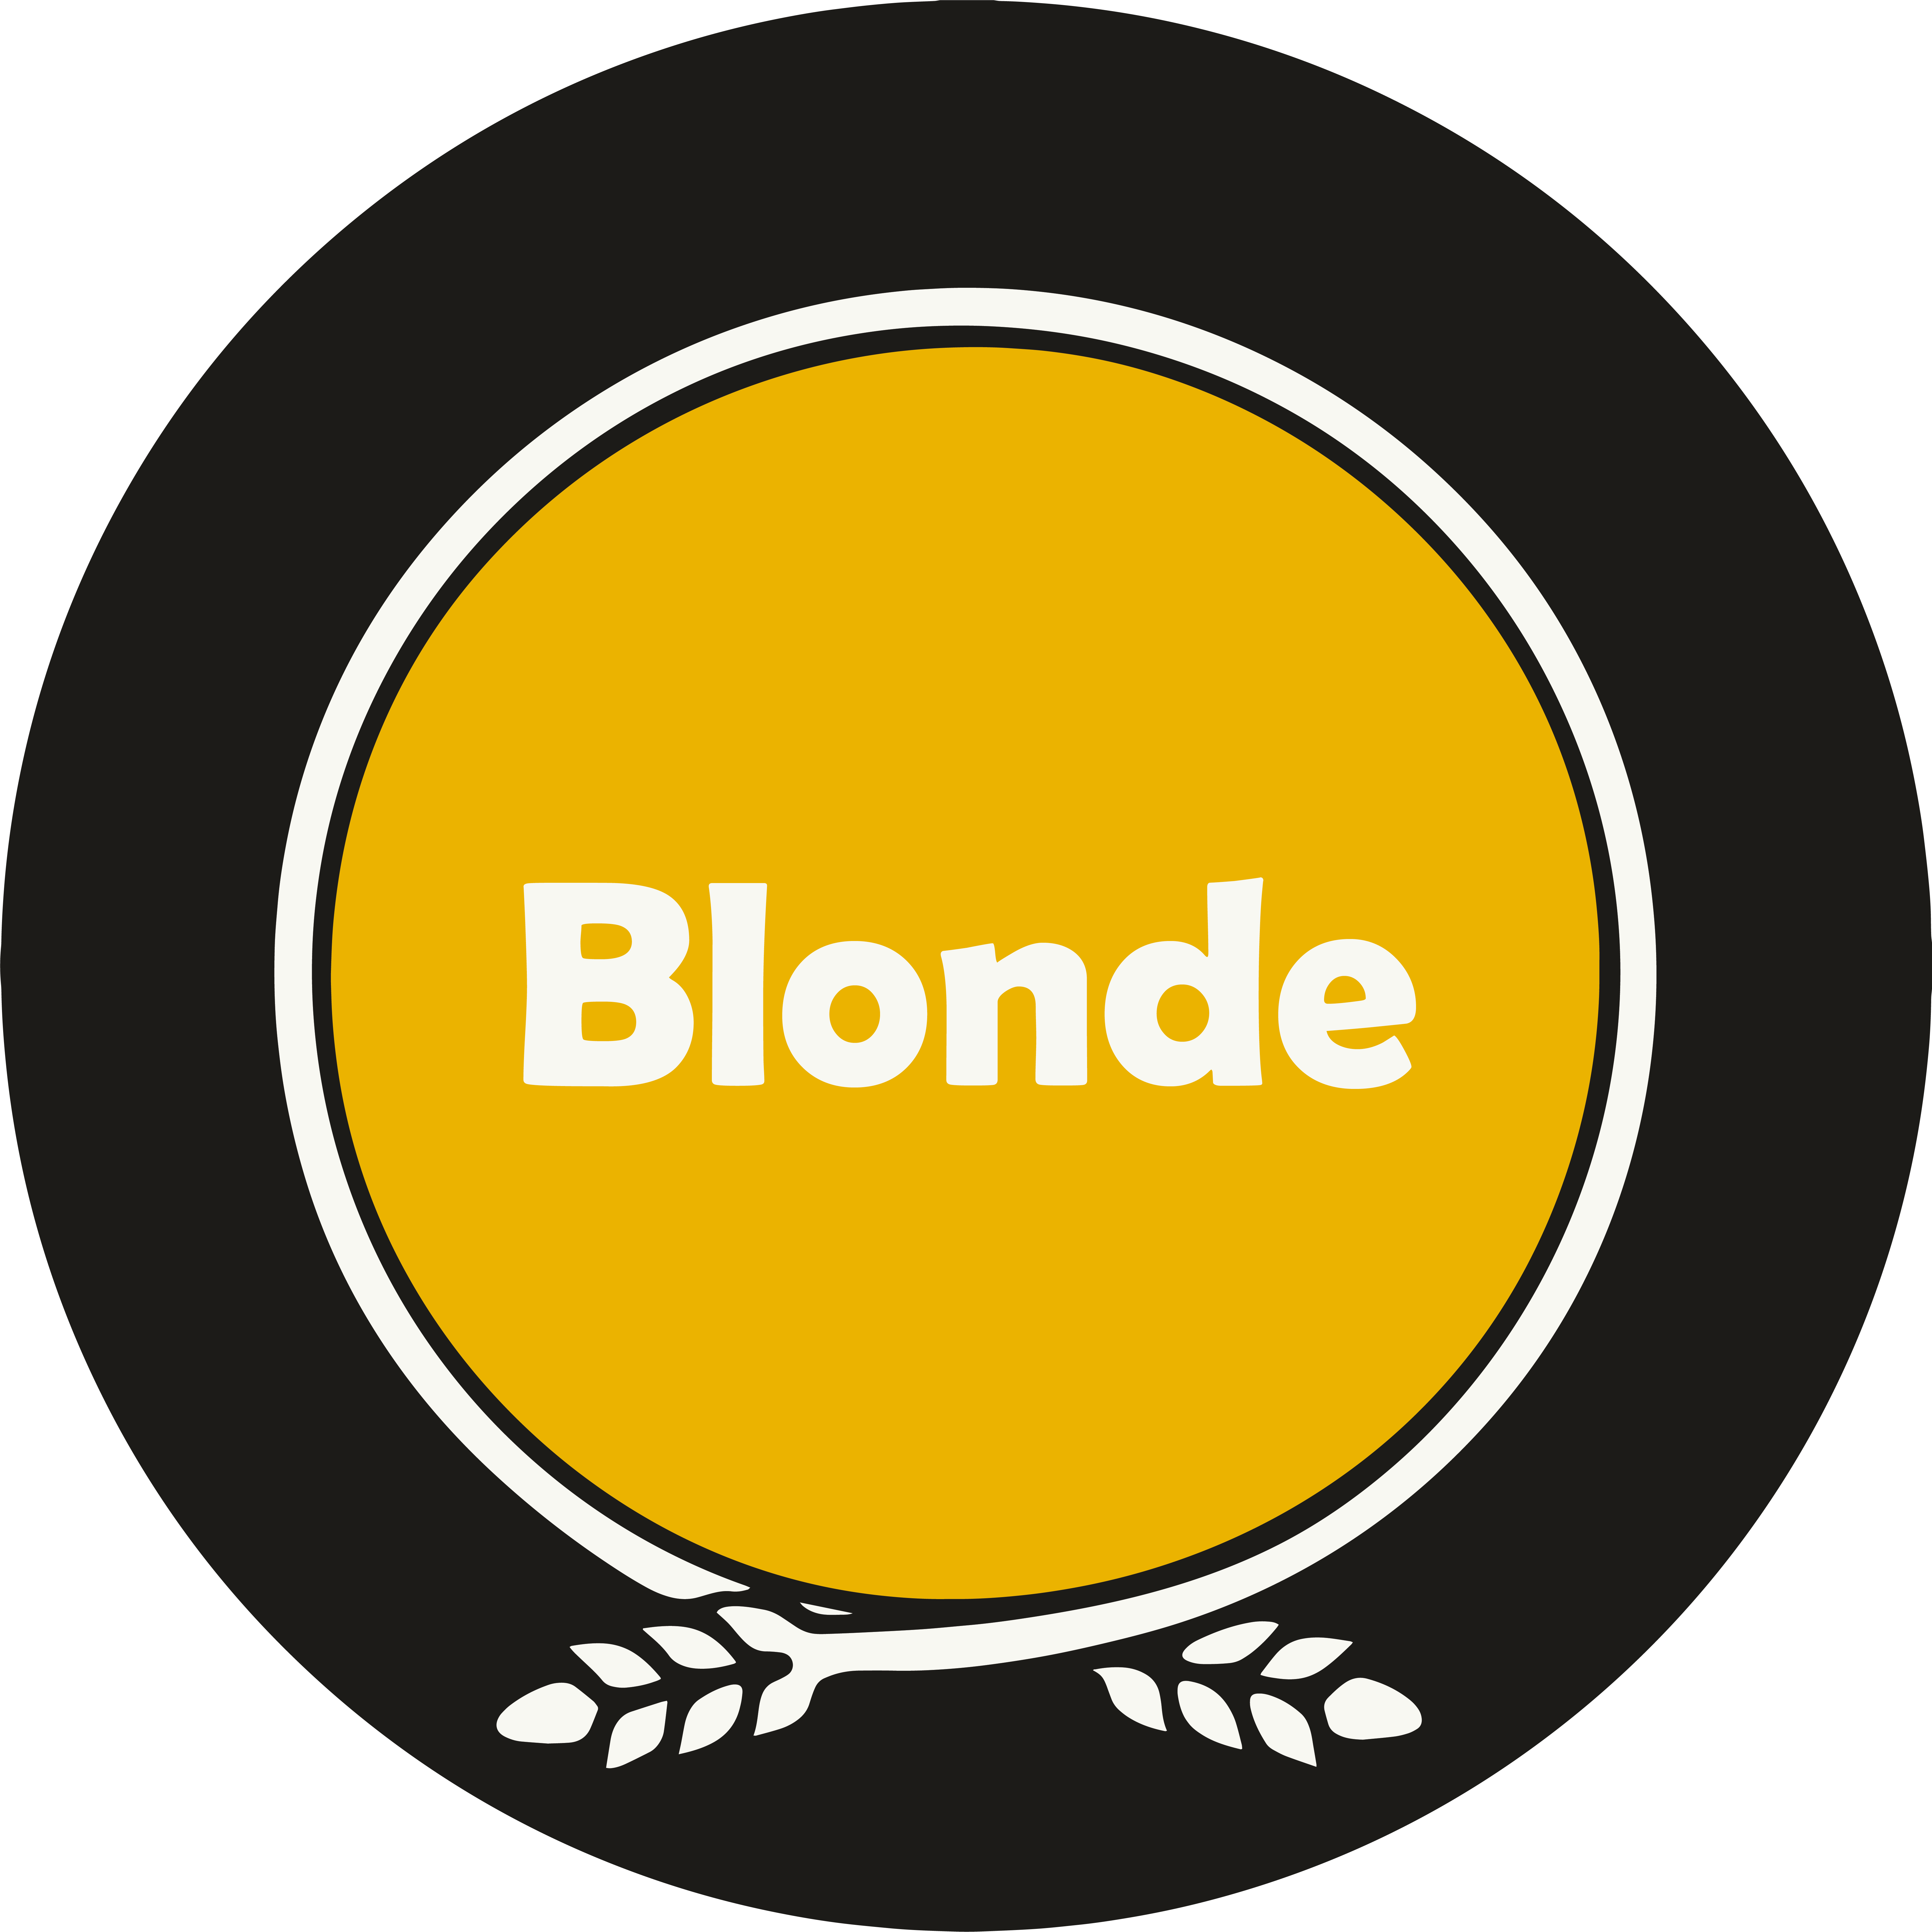 Bière artisanale blonde